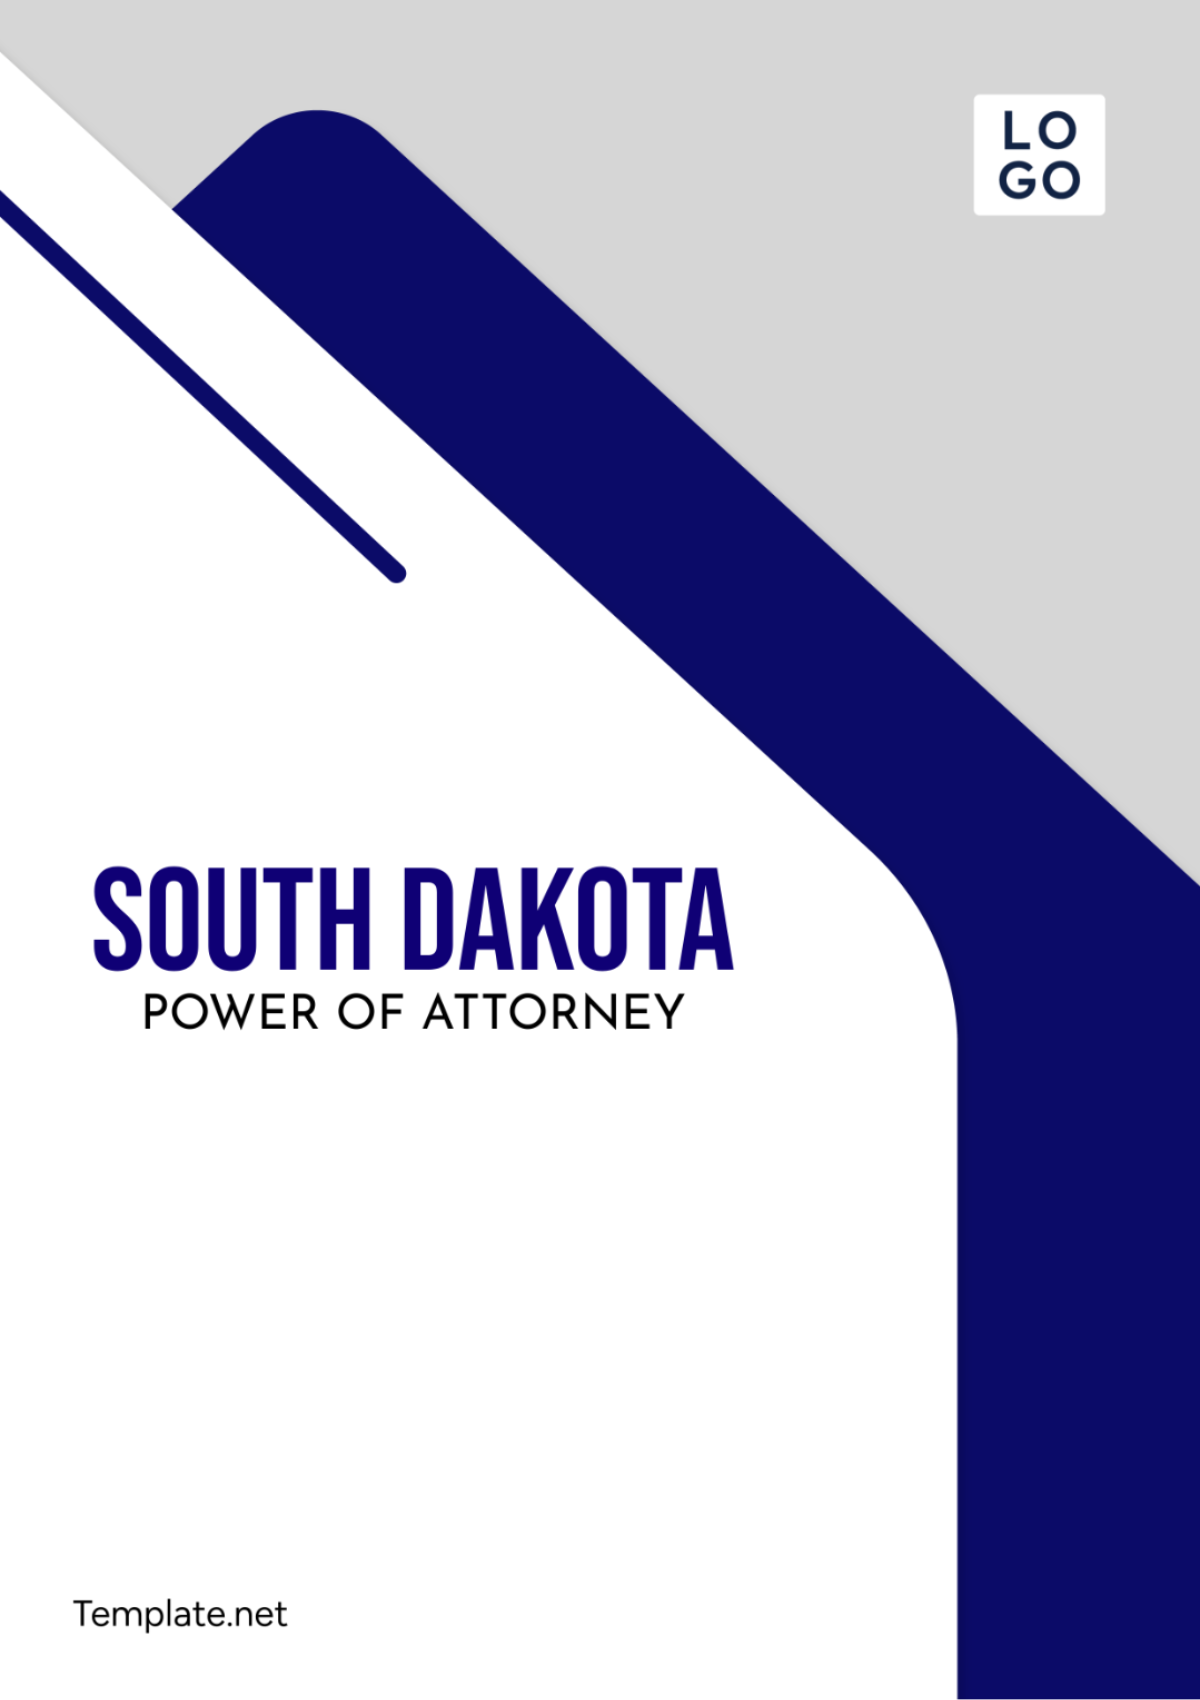 South Dakota Power of Attorney Template